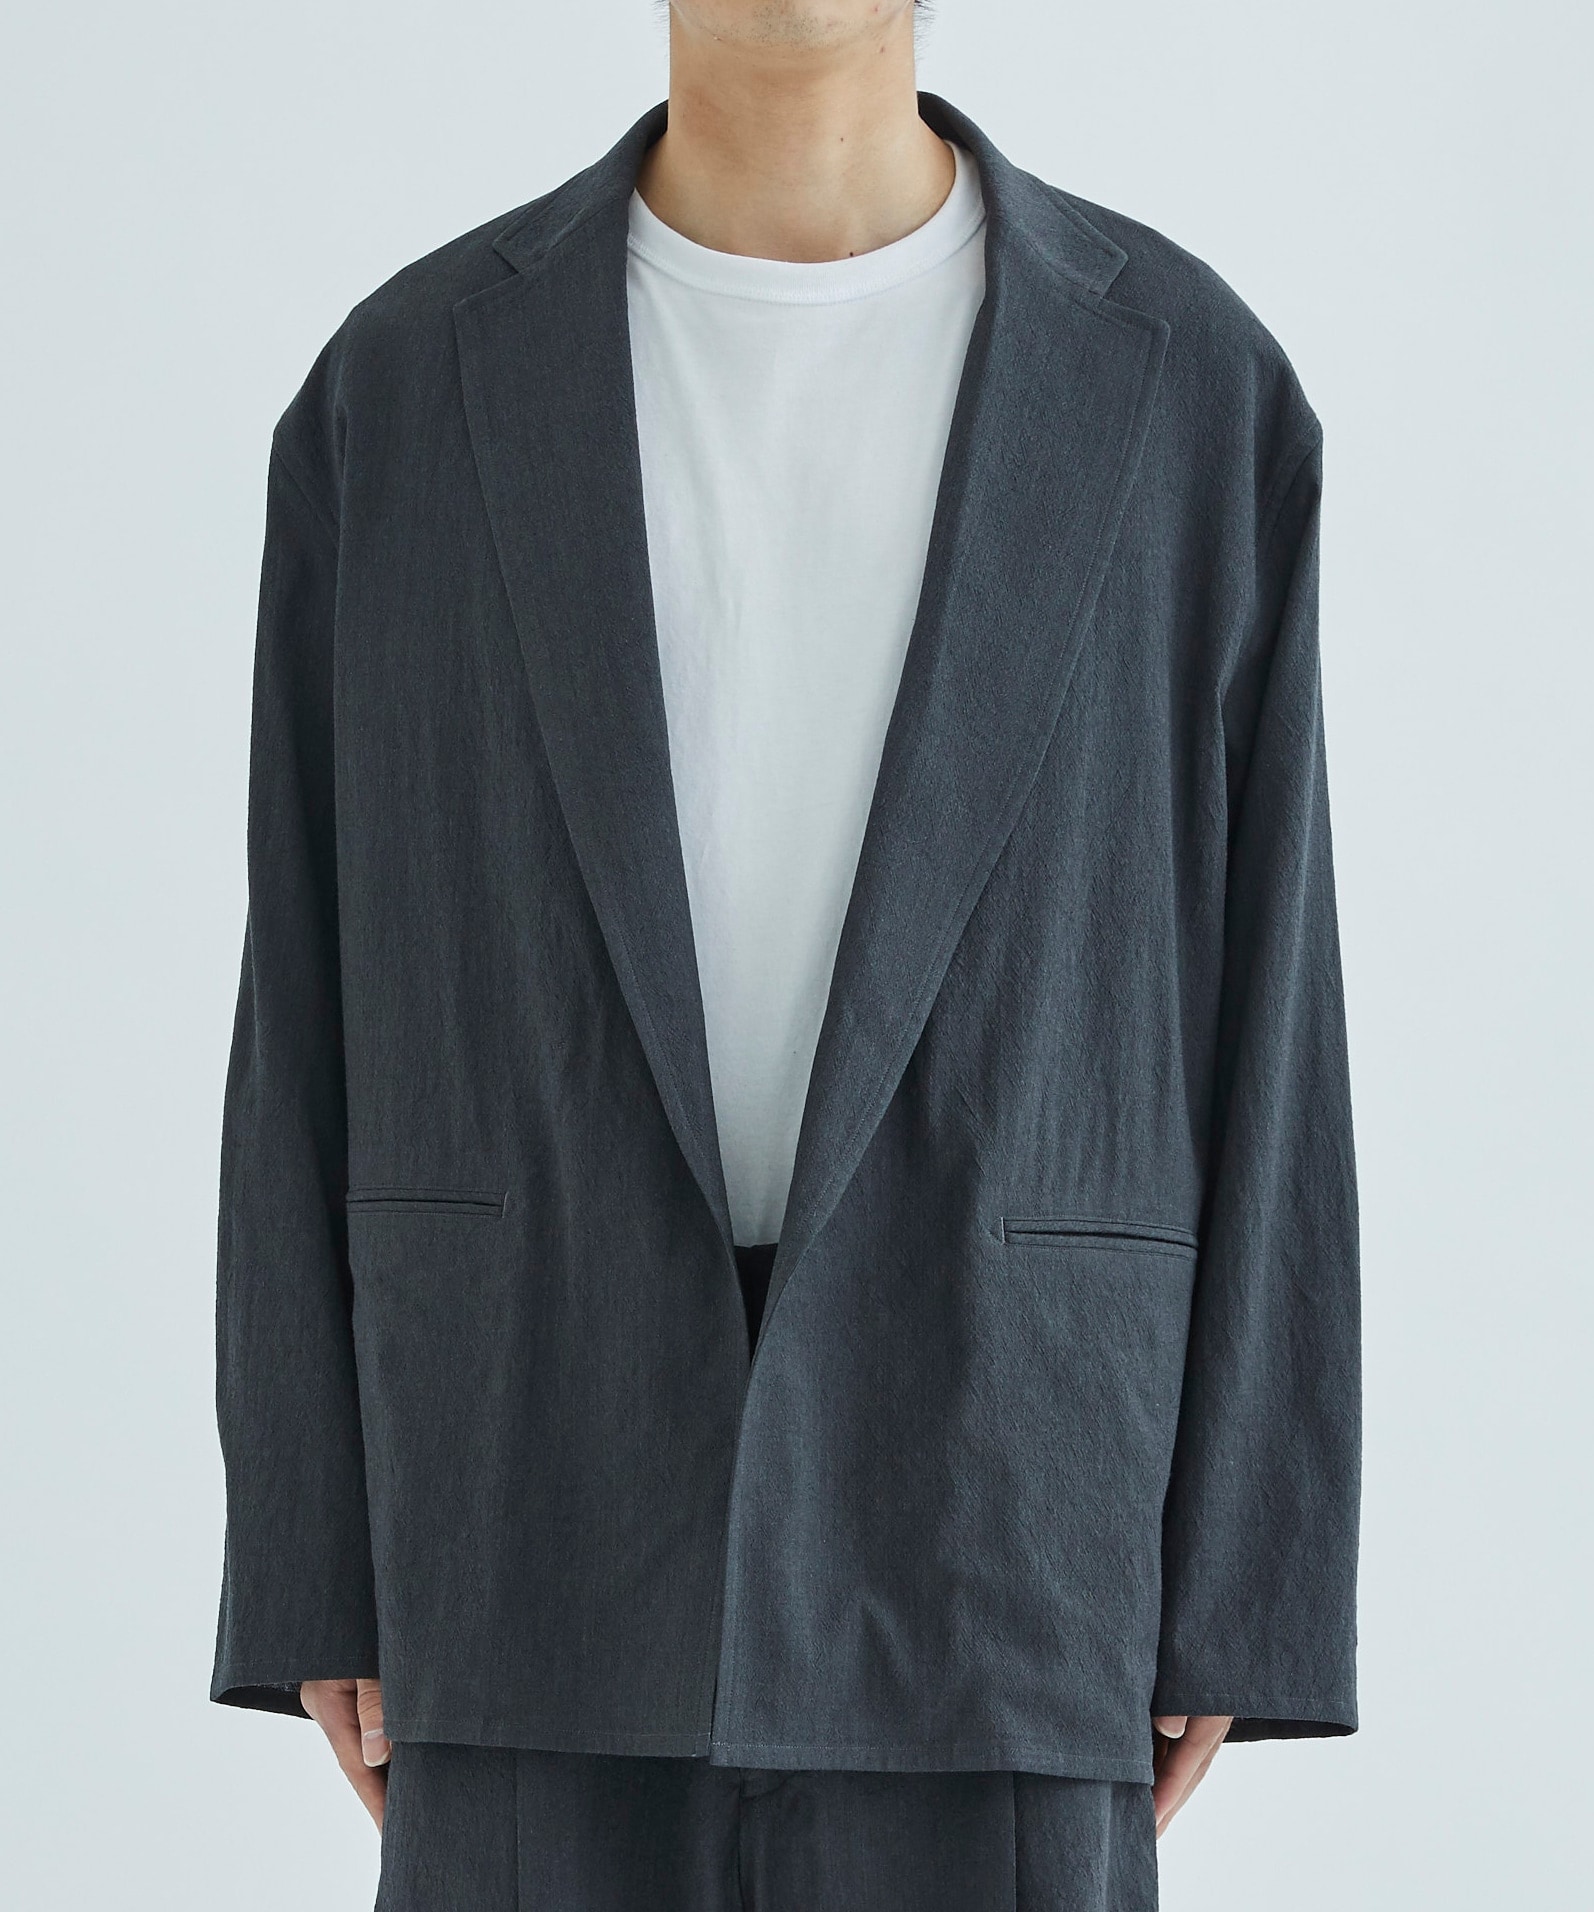 blurhms  Wool Rayon Silk Cardigan Jacket定価は59400円でした